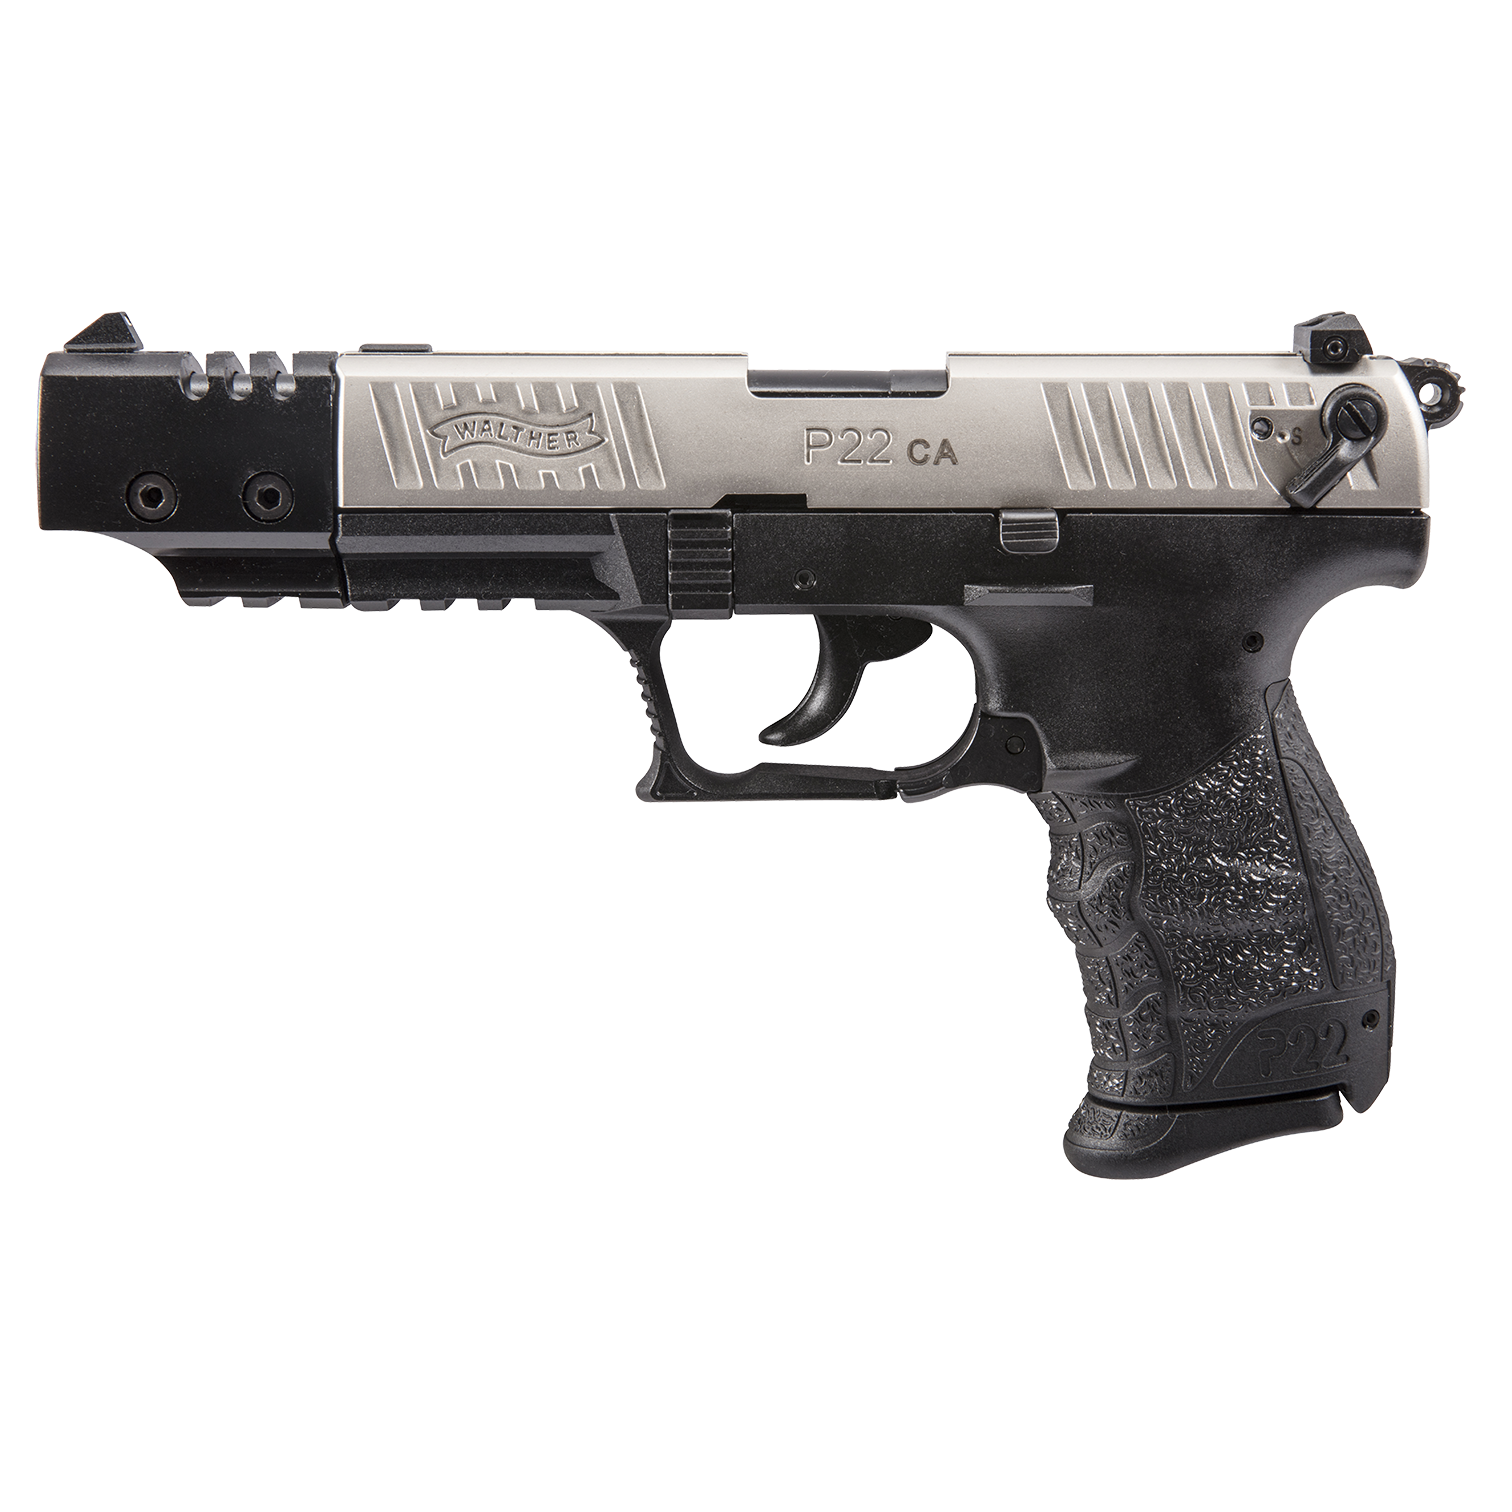 The P22 T Nickel A Walther Ca Compliant Rimfire Firearm